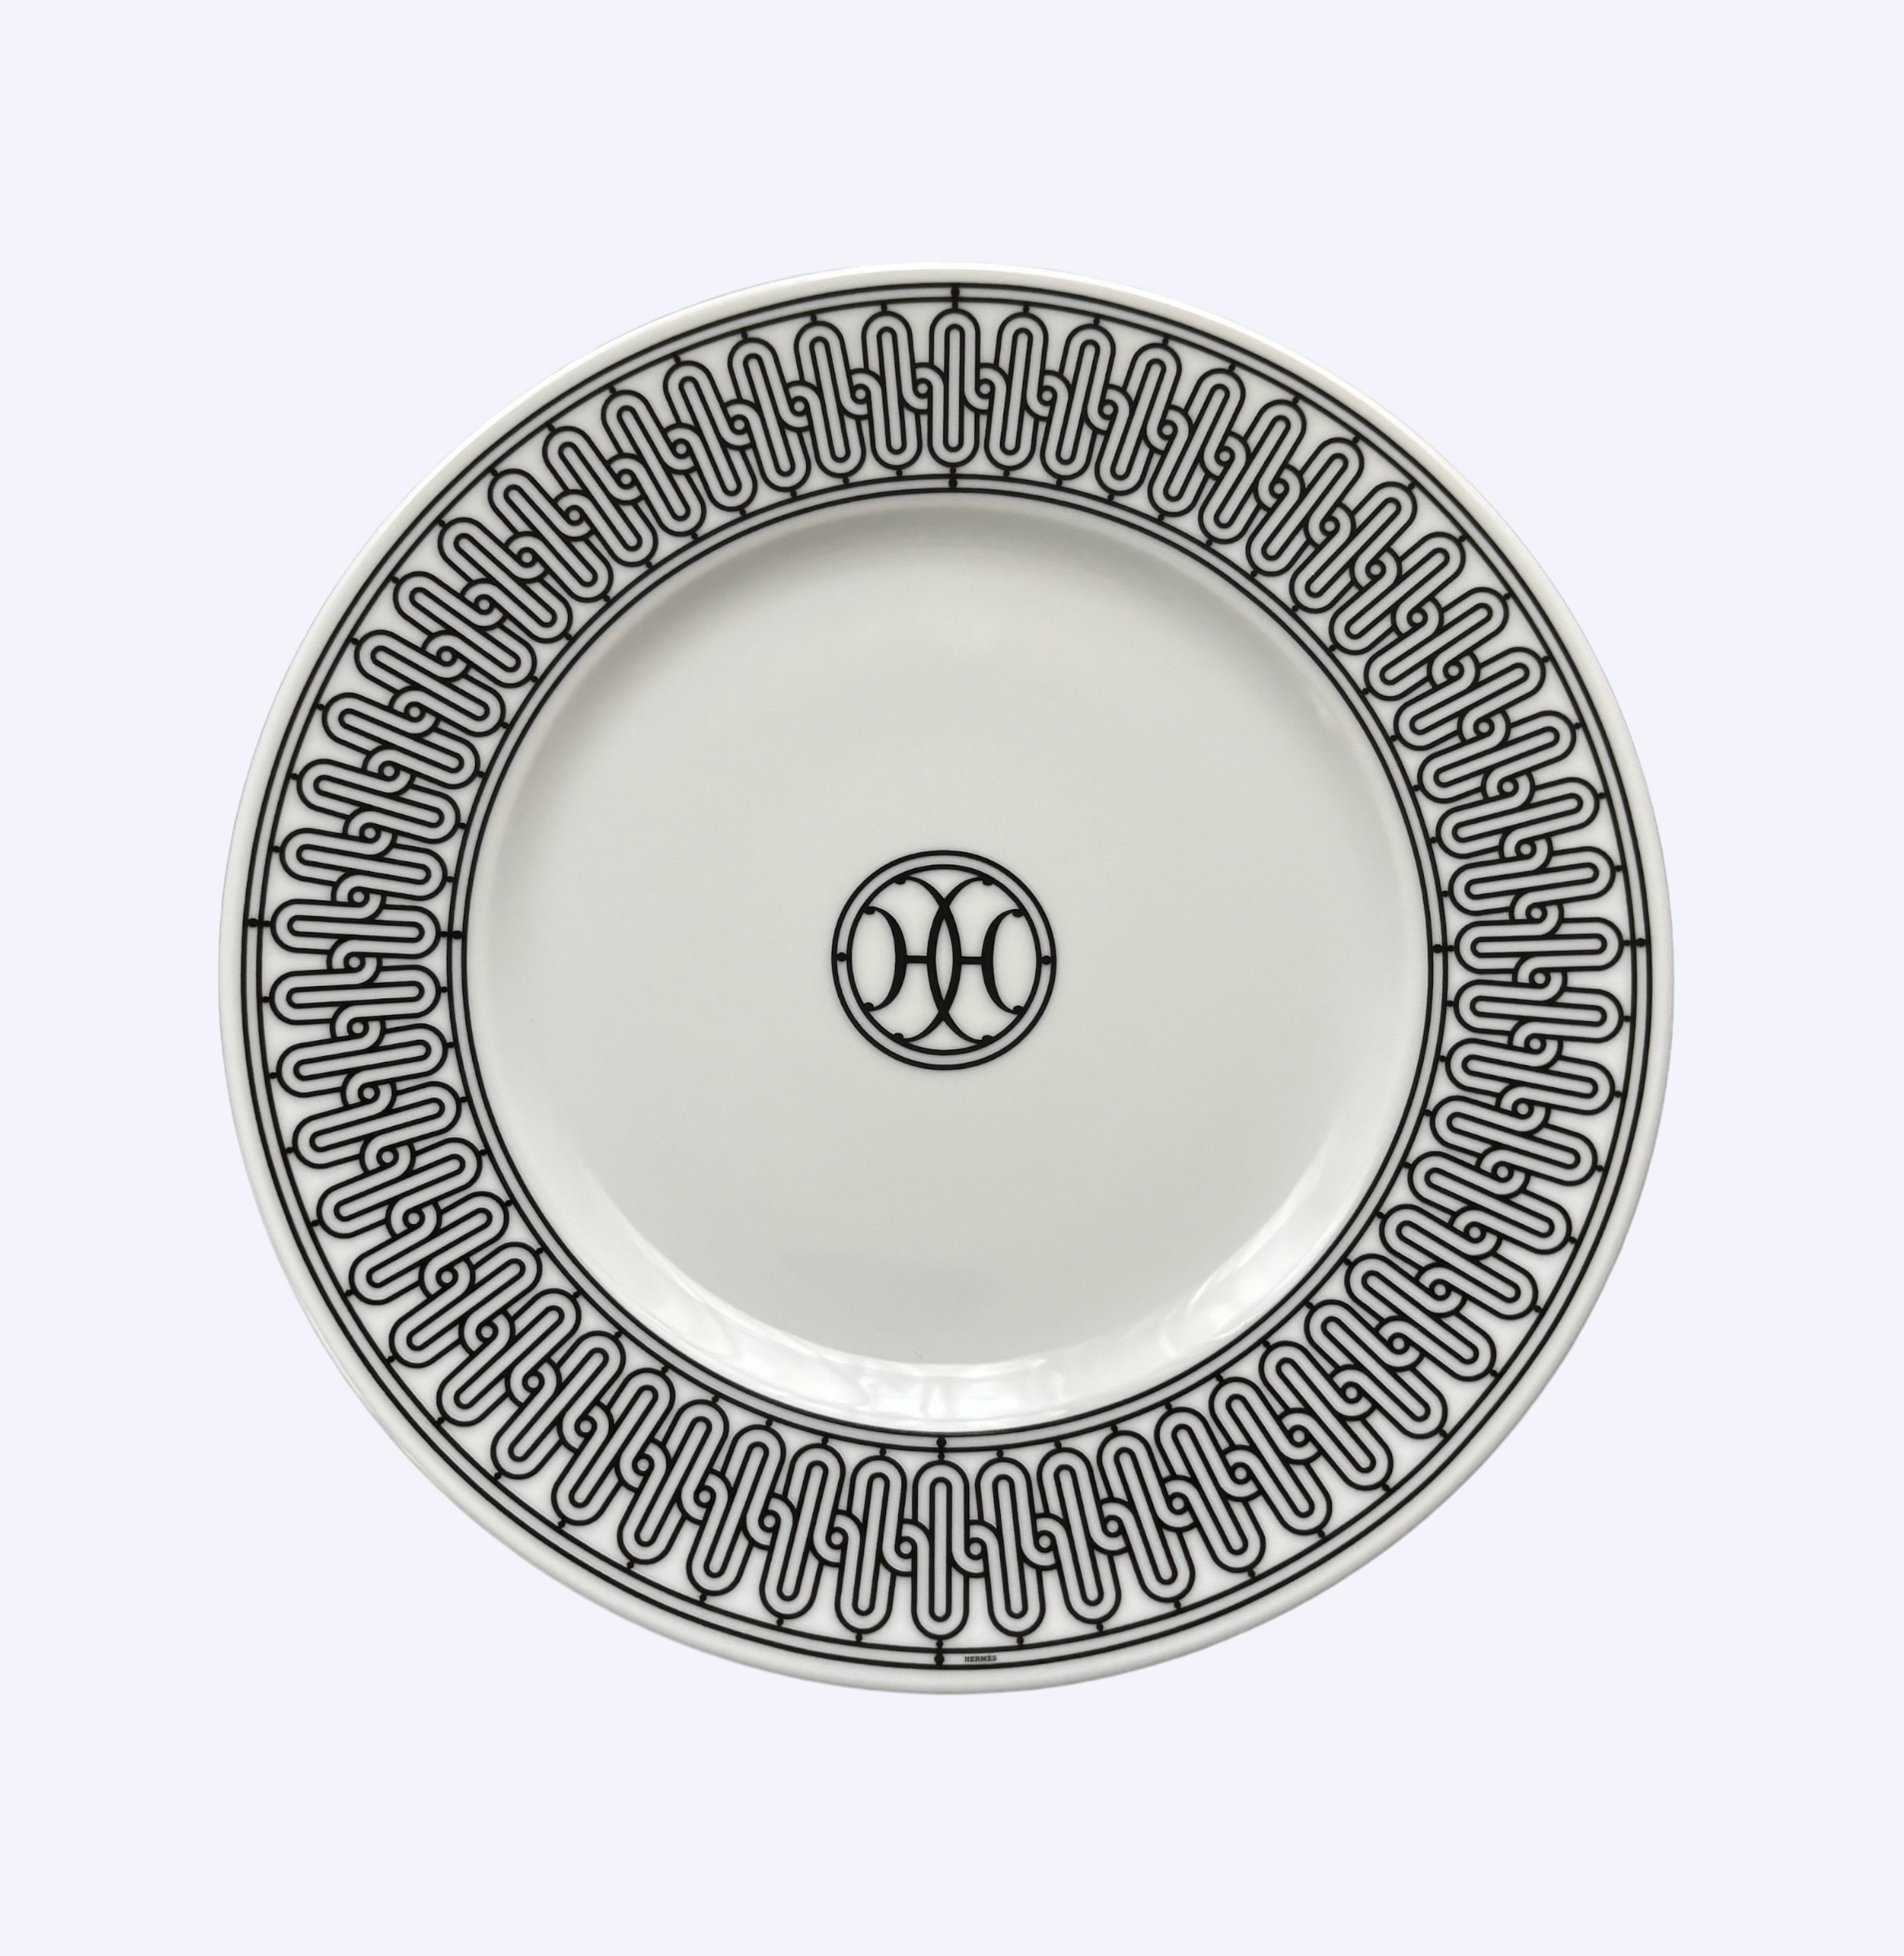 Round Herme's Logo White Ashtray / Jewelry Plate